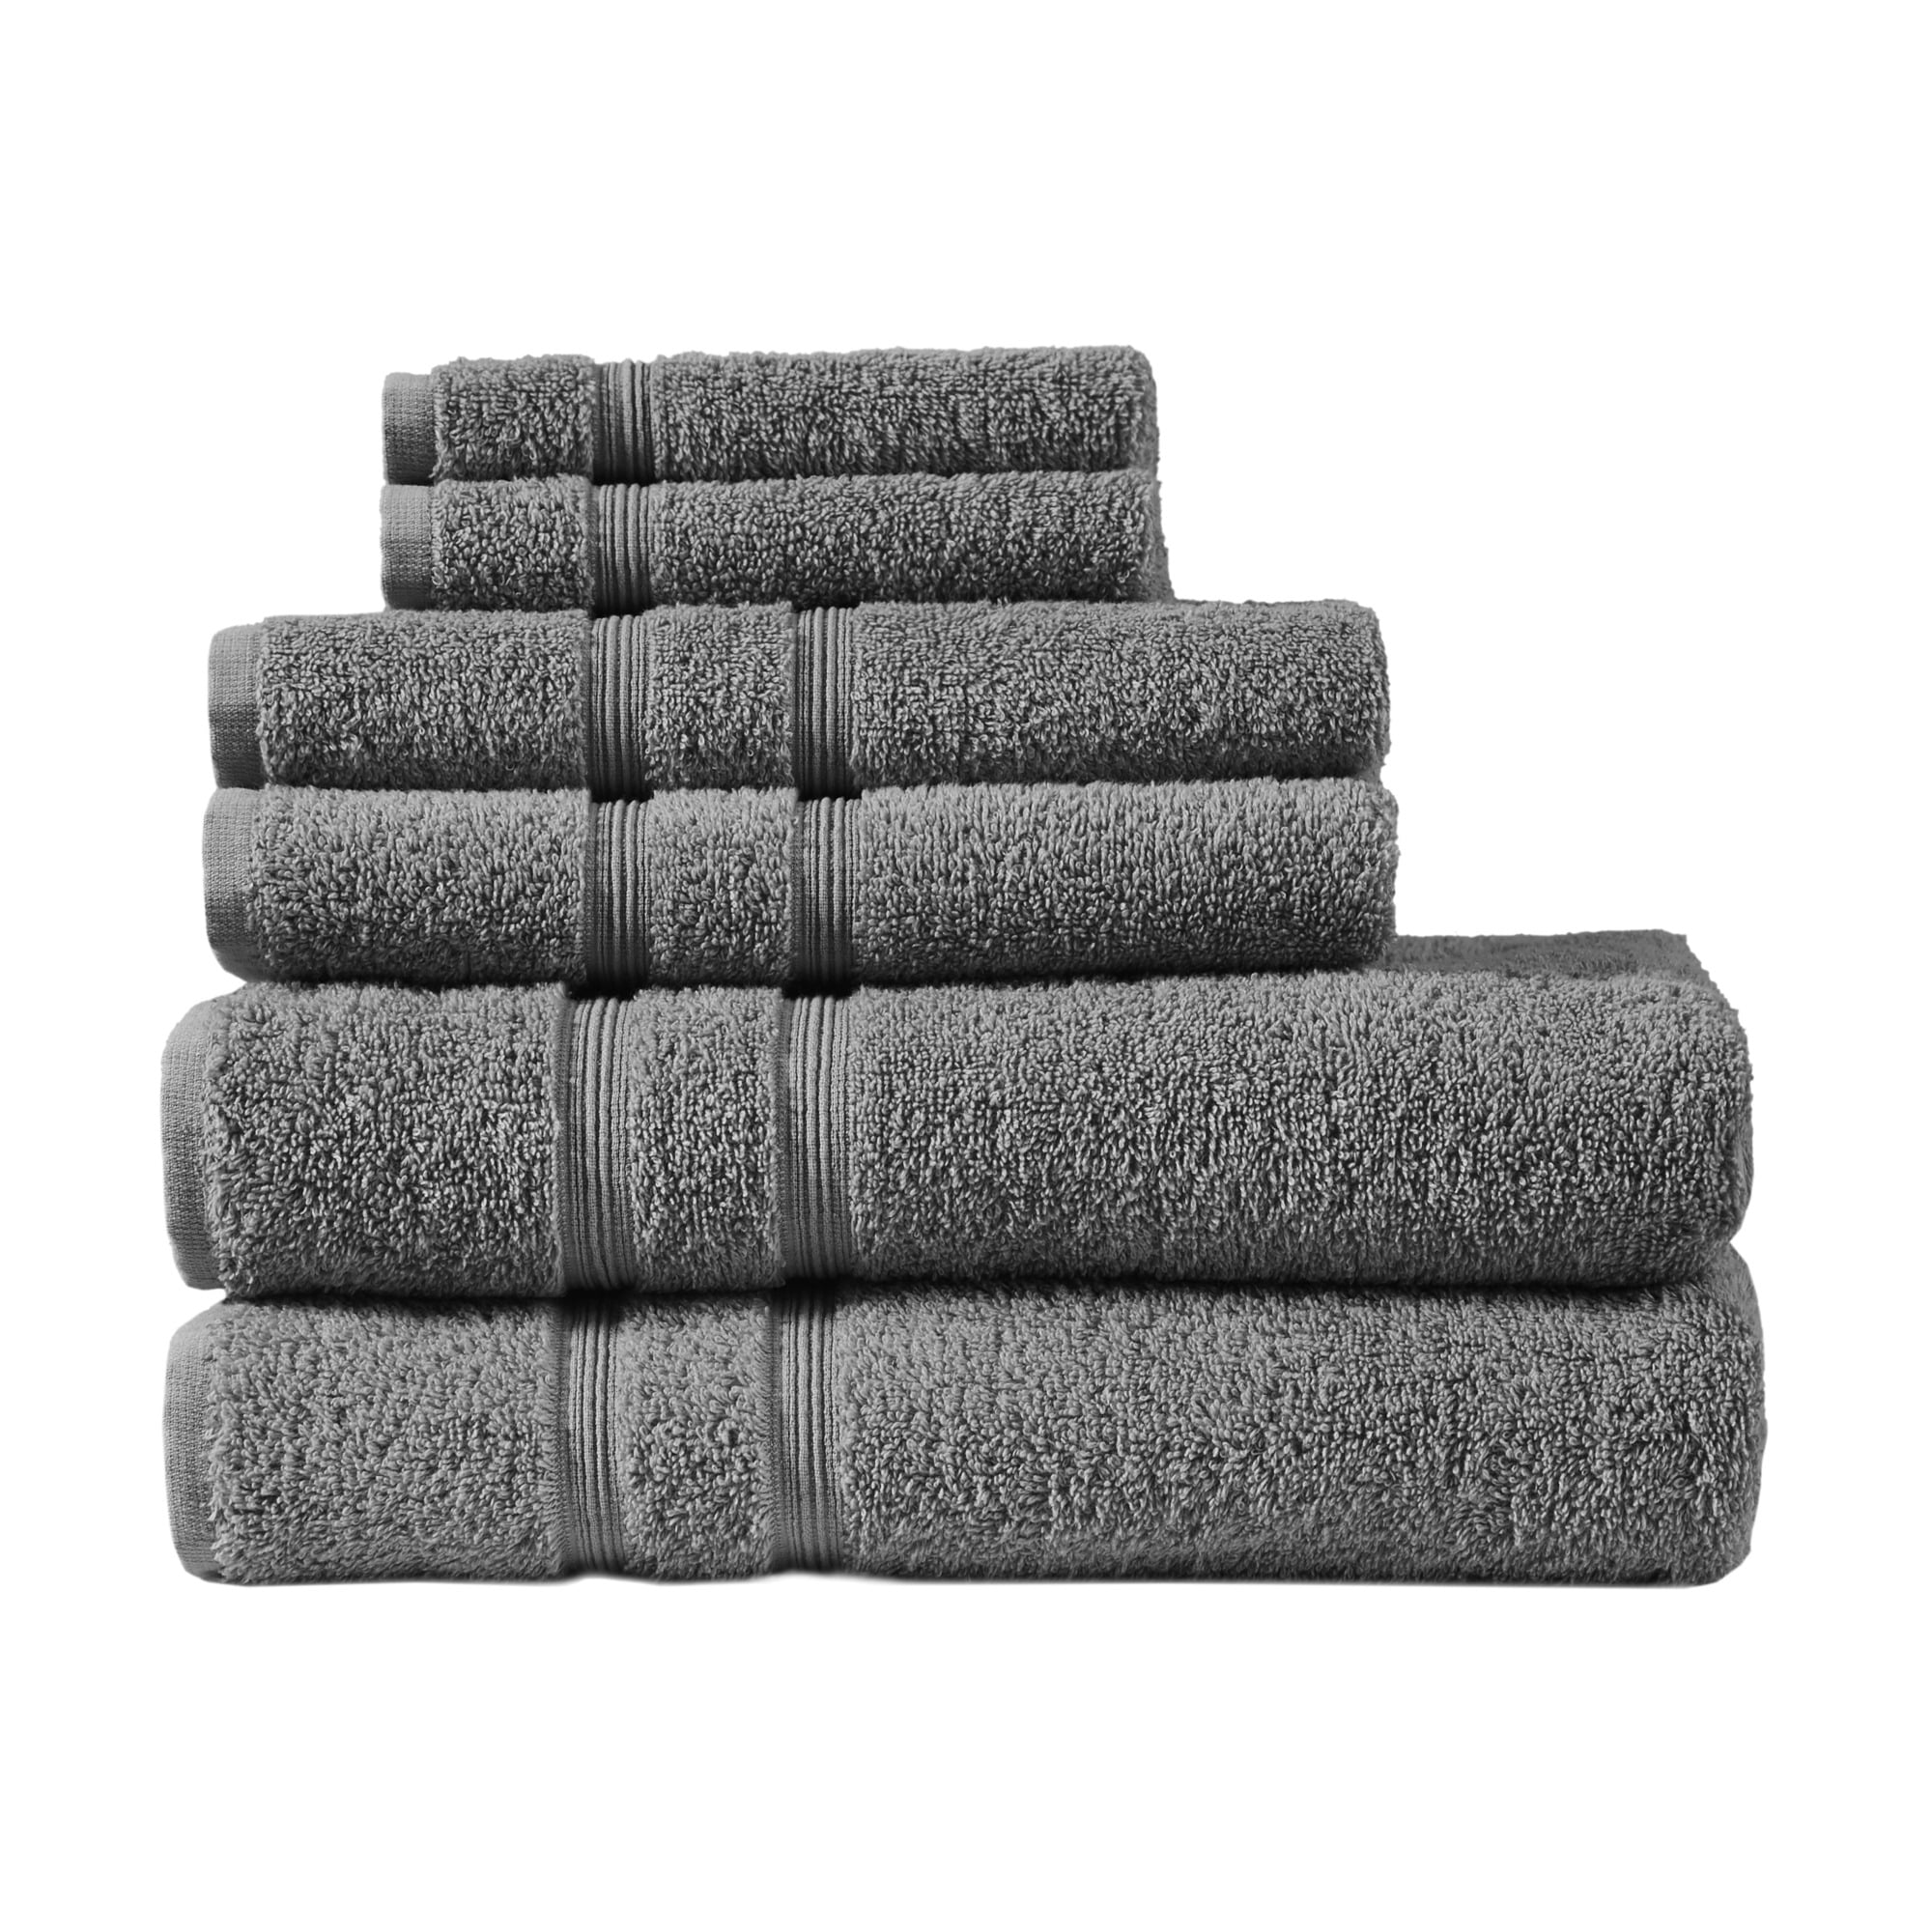 510 DESIGN Casual Turkish Cotton 6 Piece Towel Set with Aqua Finish  5DS73-0236, 1 unit - Ralphs